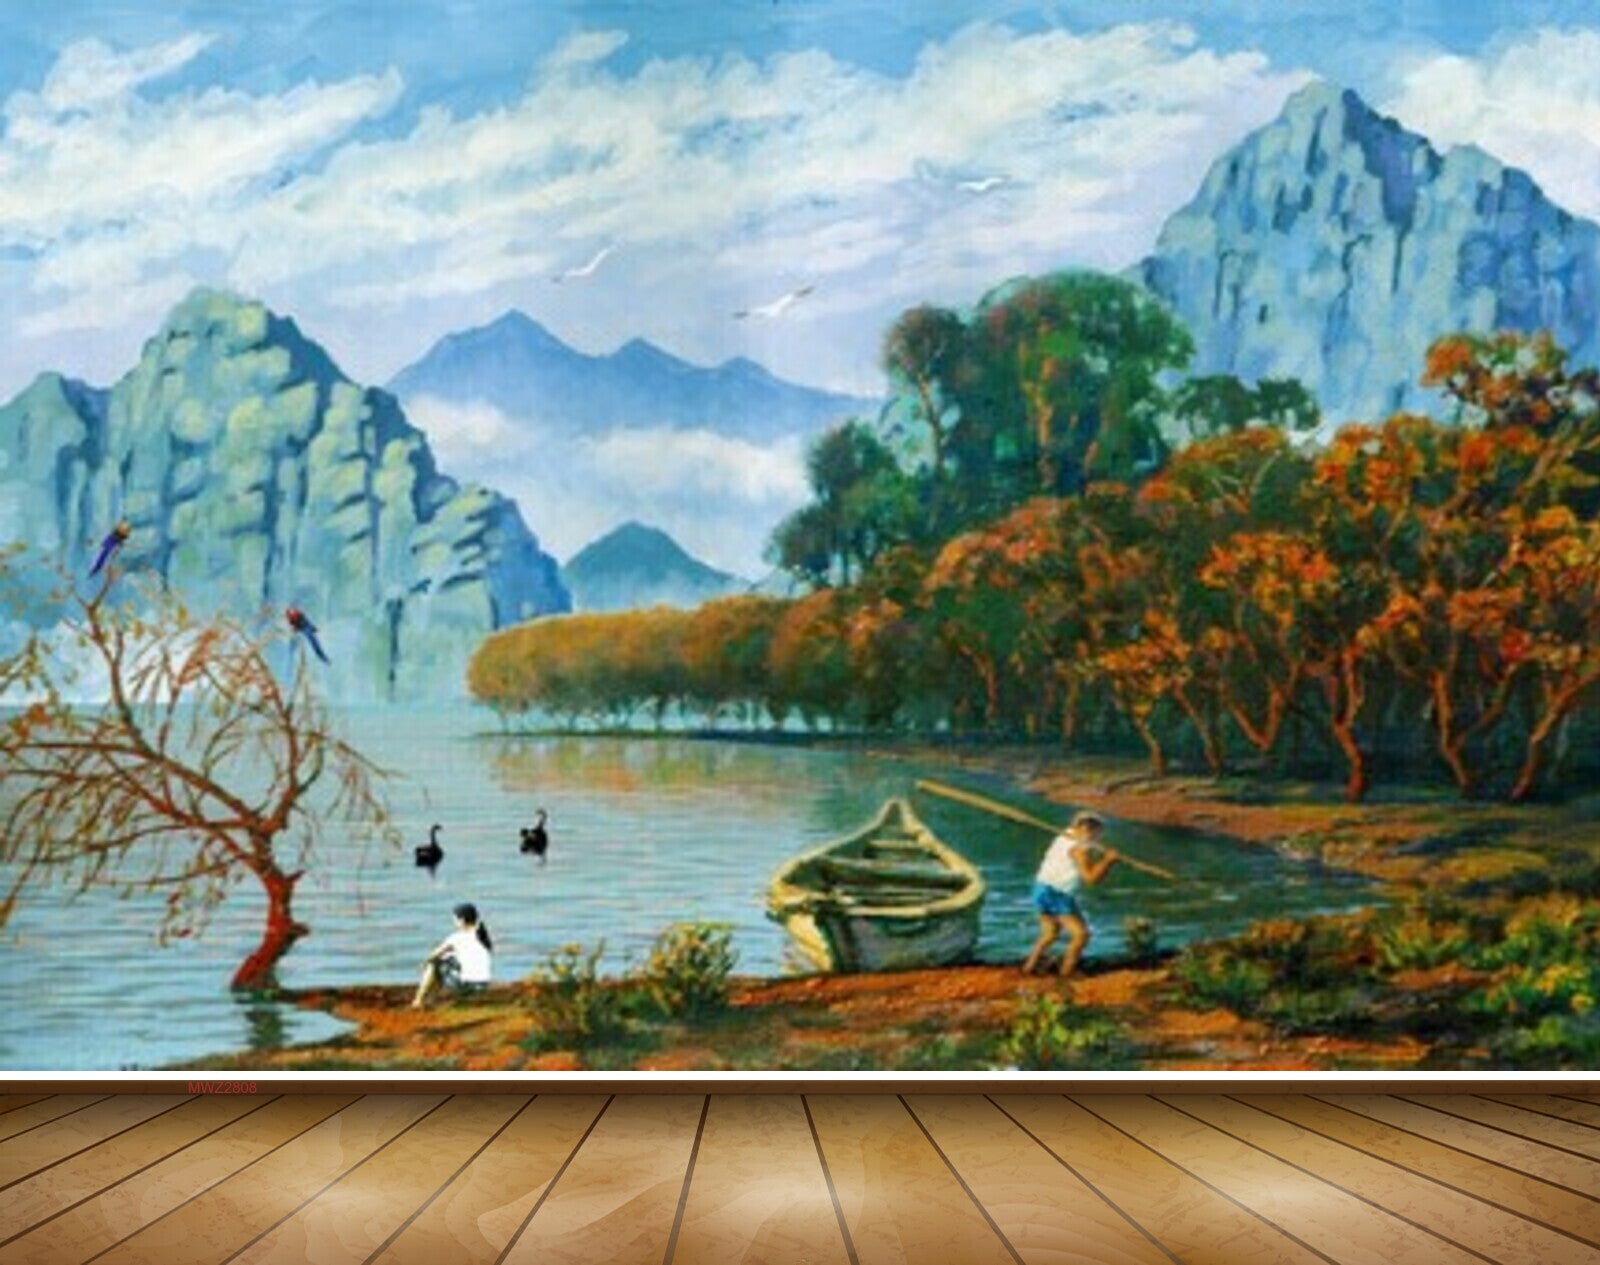 Avikalp MWZ2808 Clouds Mountains Trees Water Lake Boat Cranes Man Girls People Painting HD Wallpaper